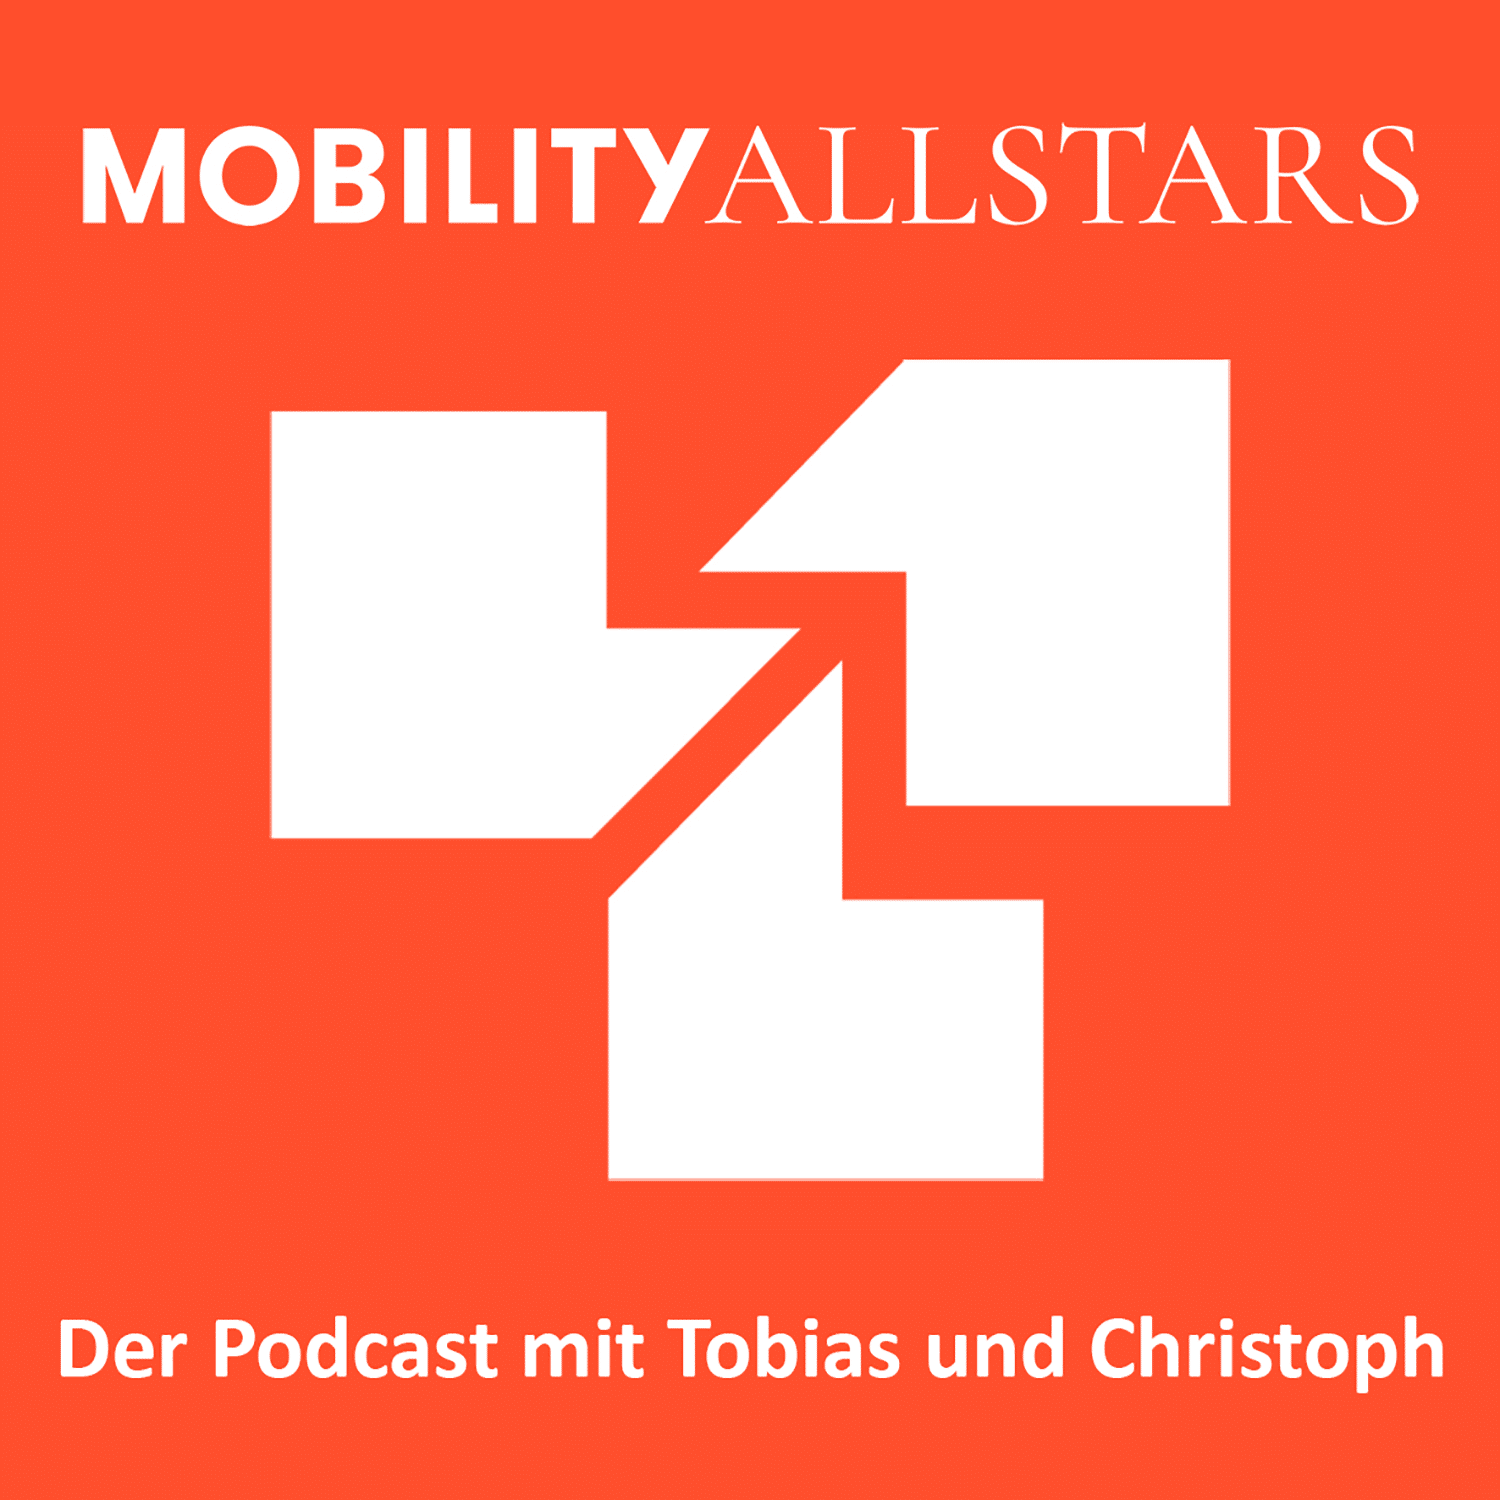 Der Mobility Allstars Podcast im Tourismus